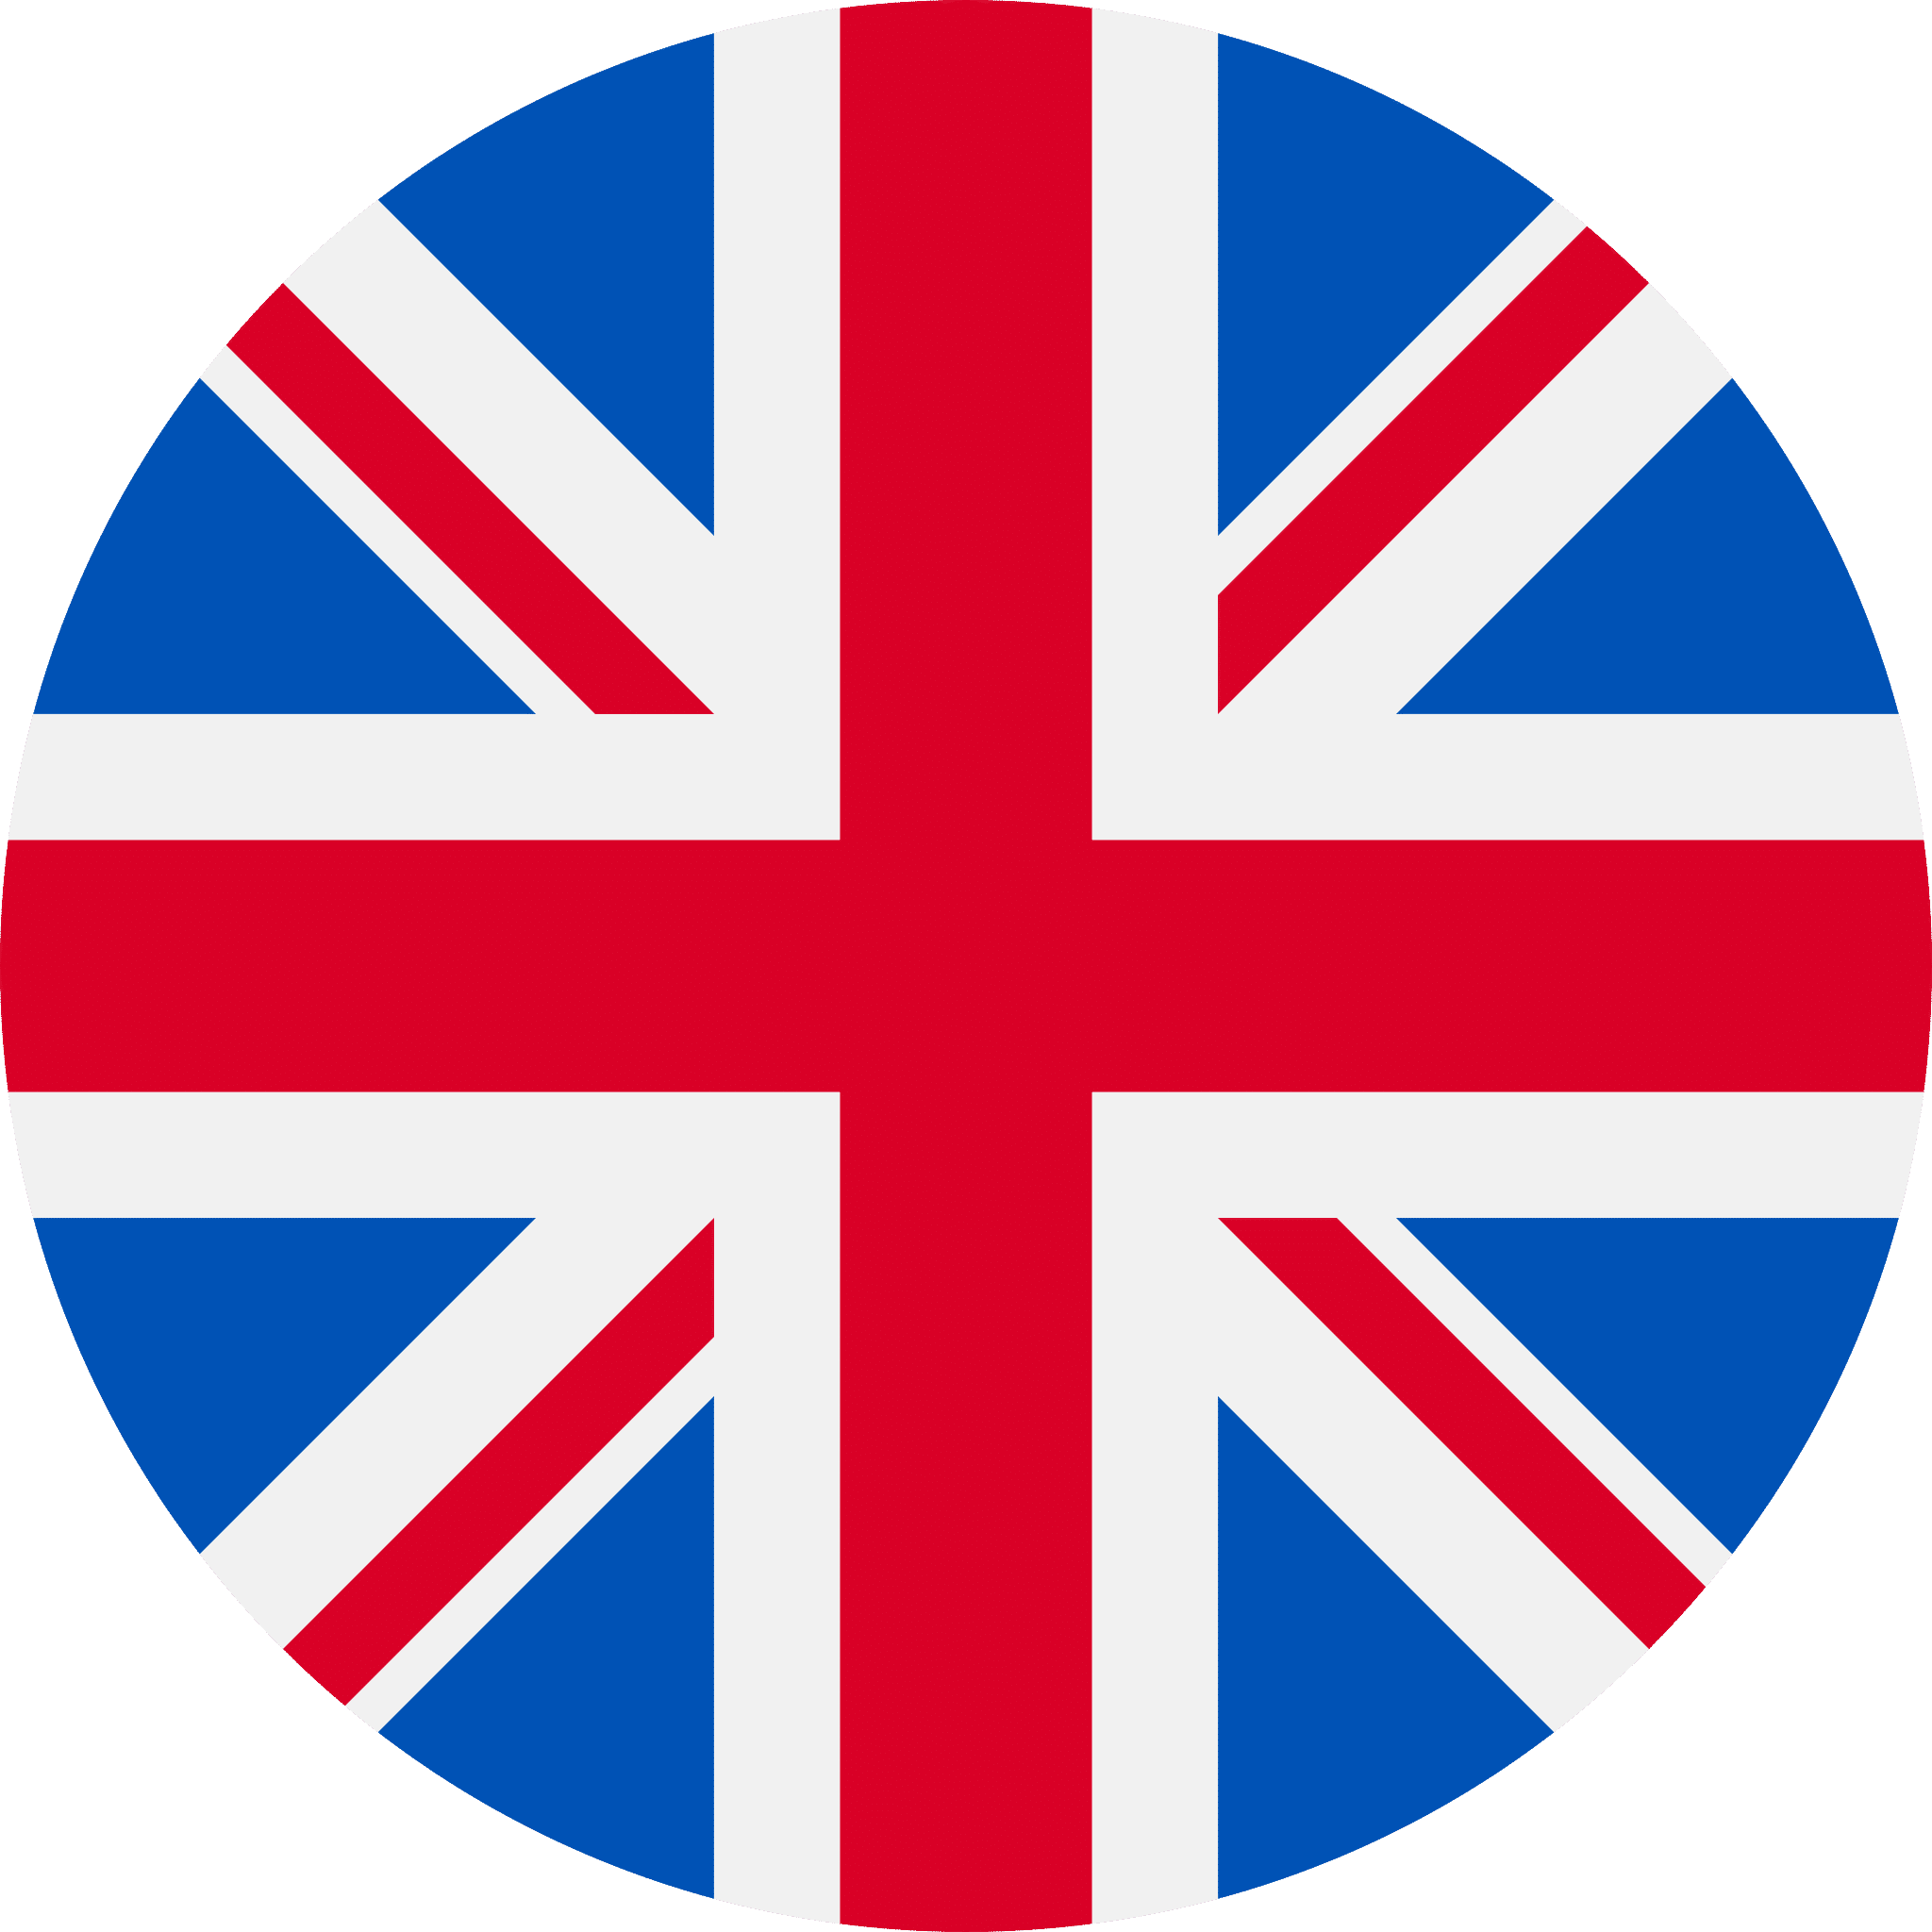 United kingdom flag icon round.svg - ئەنتیگوا باربودا ڤیزای وڵاتانی ئازاد